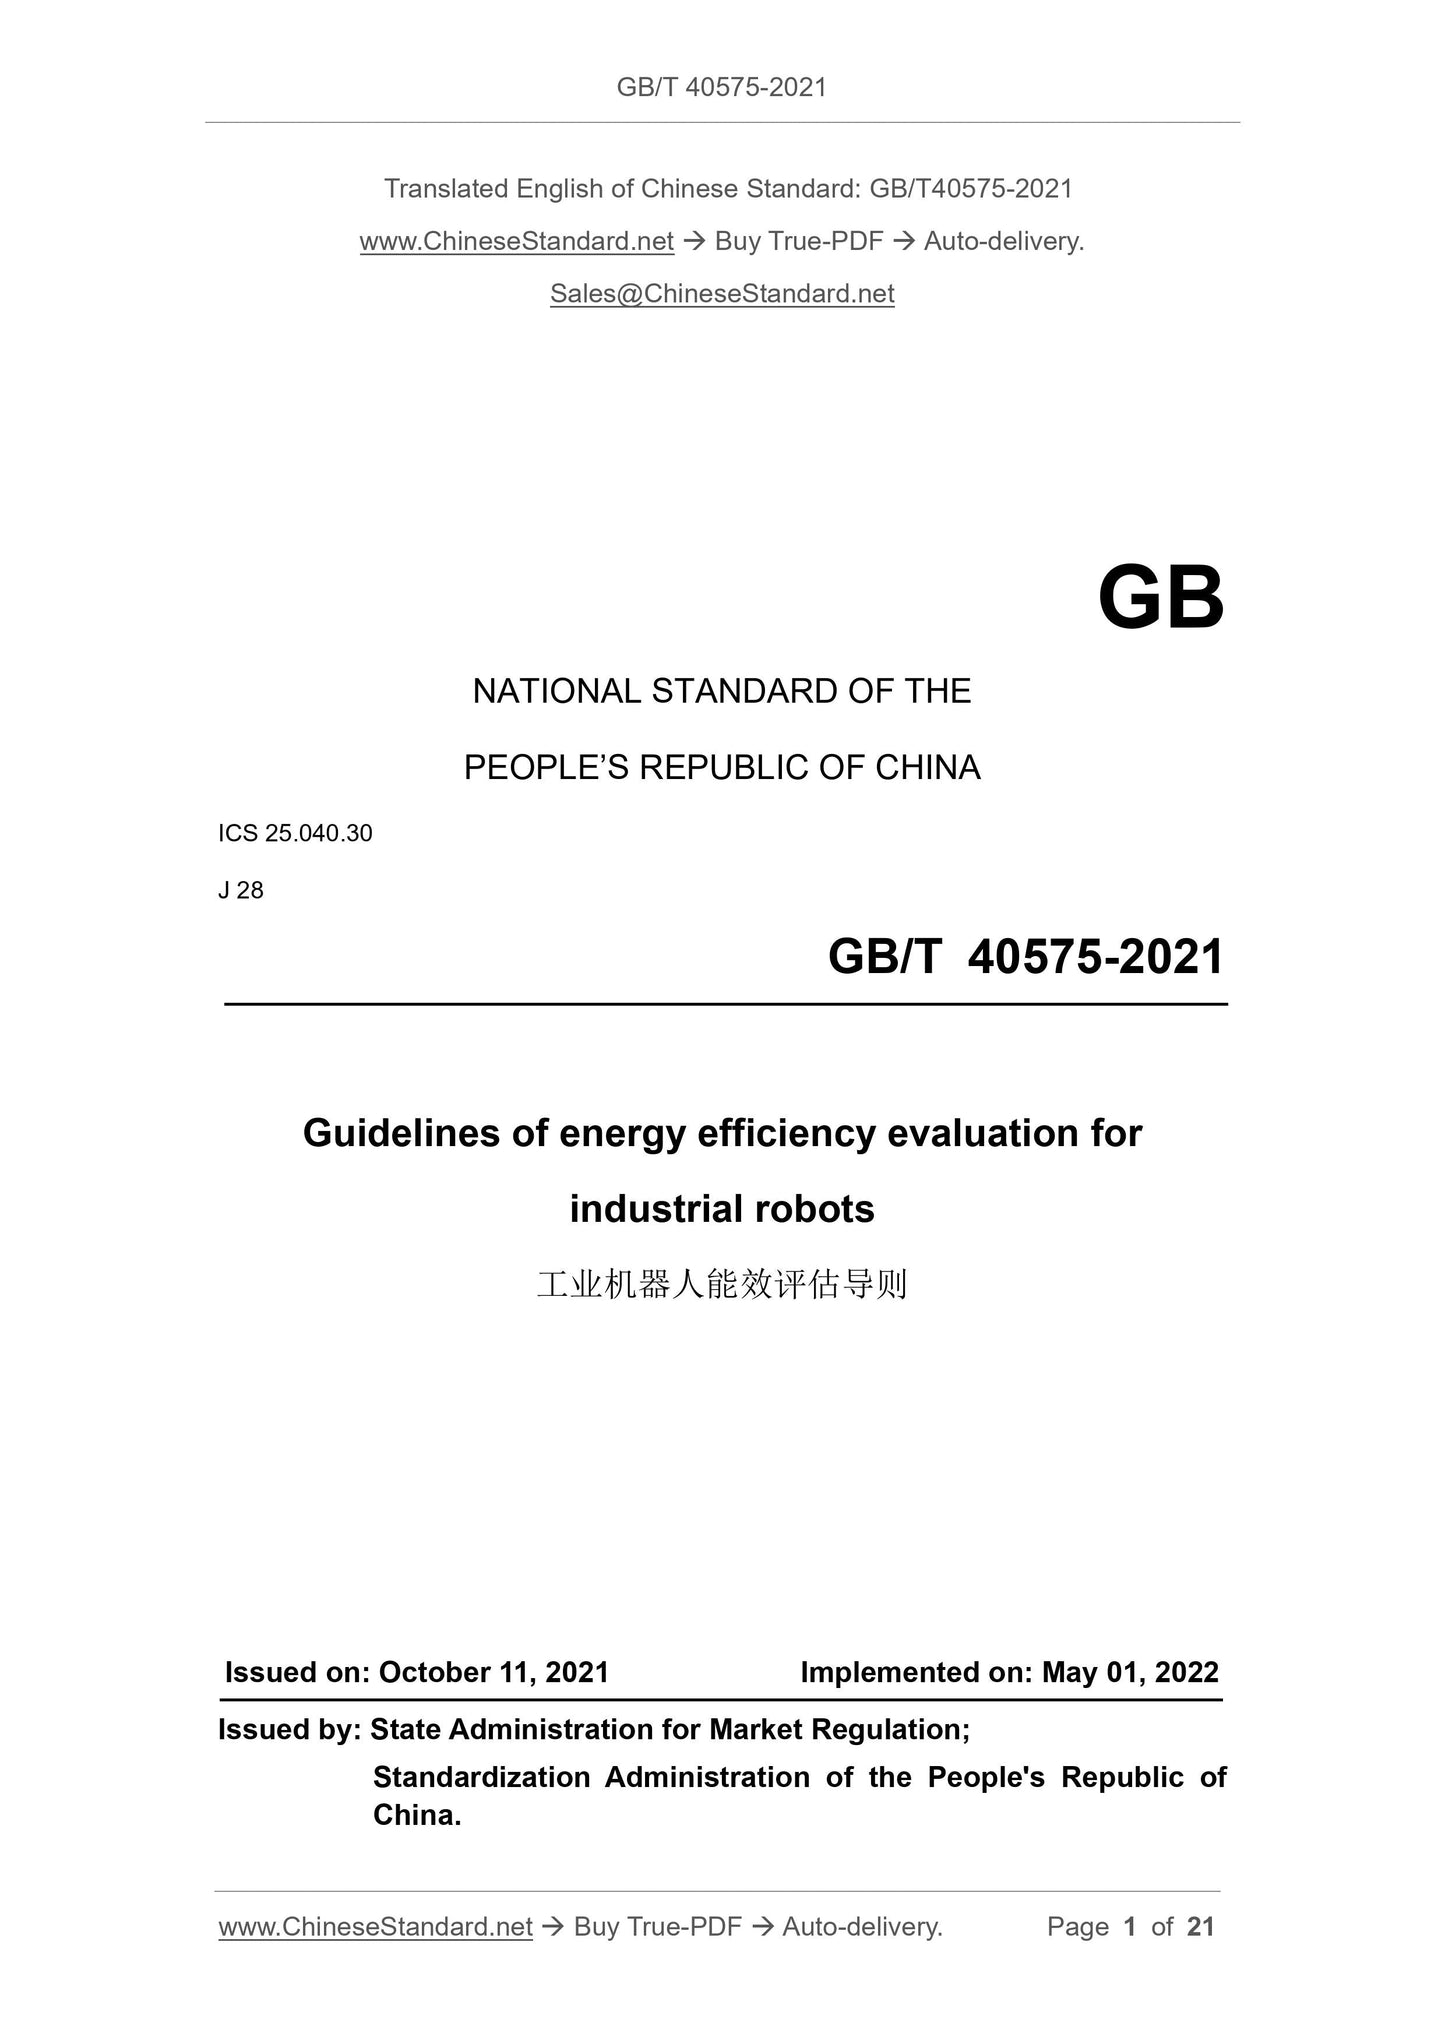 GBT40575-2021 Page 1